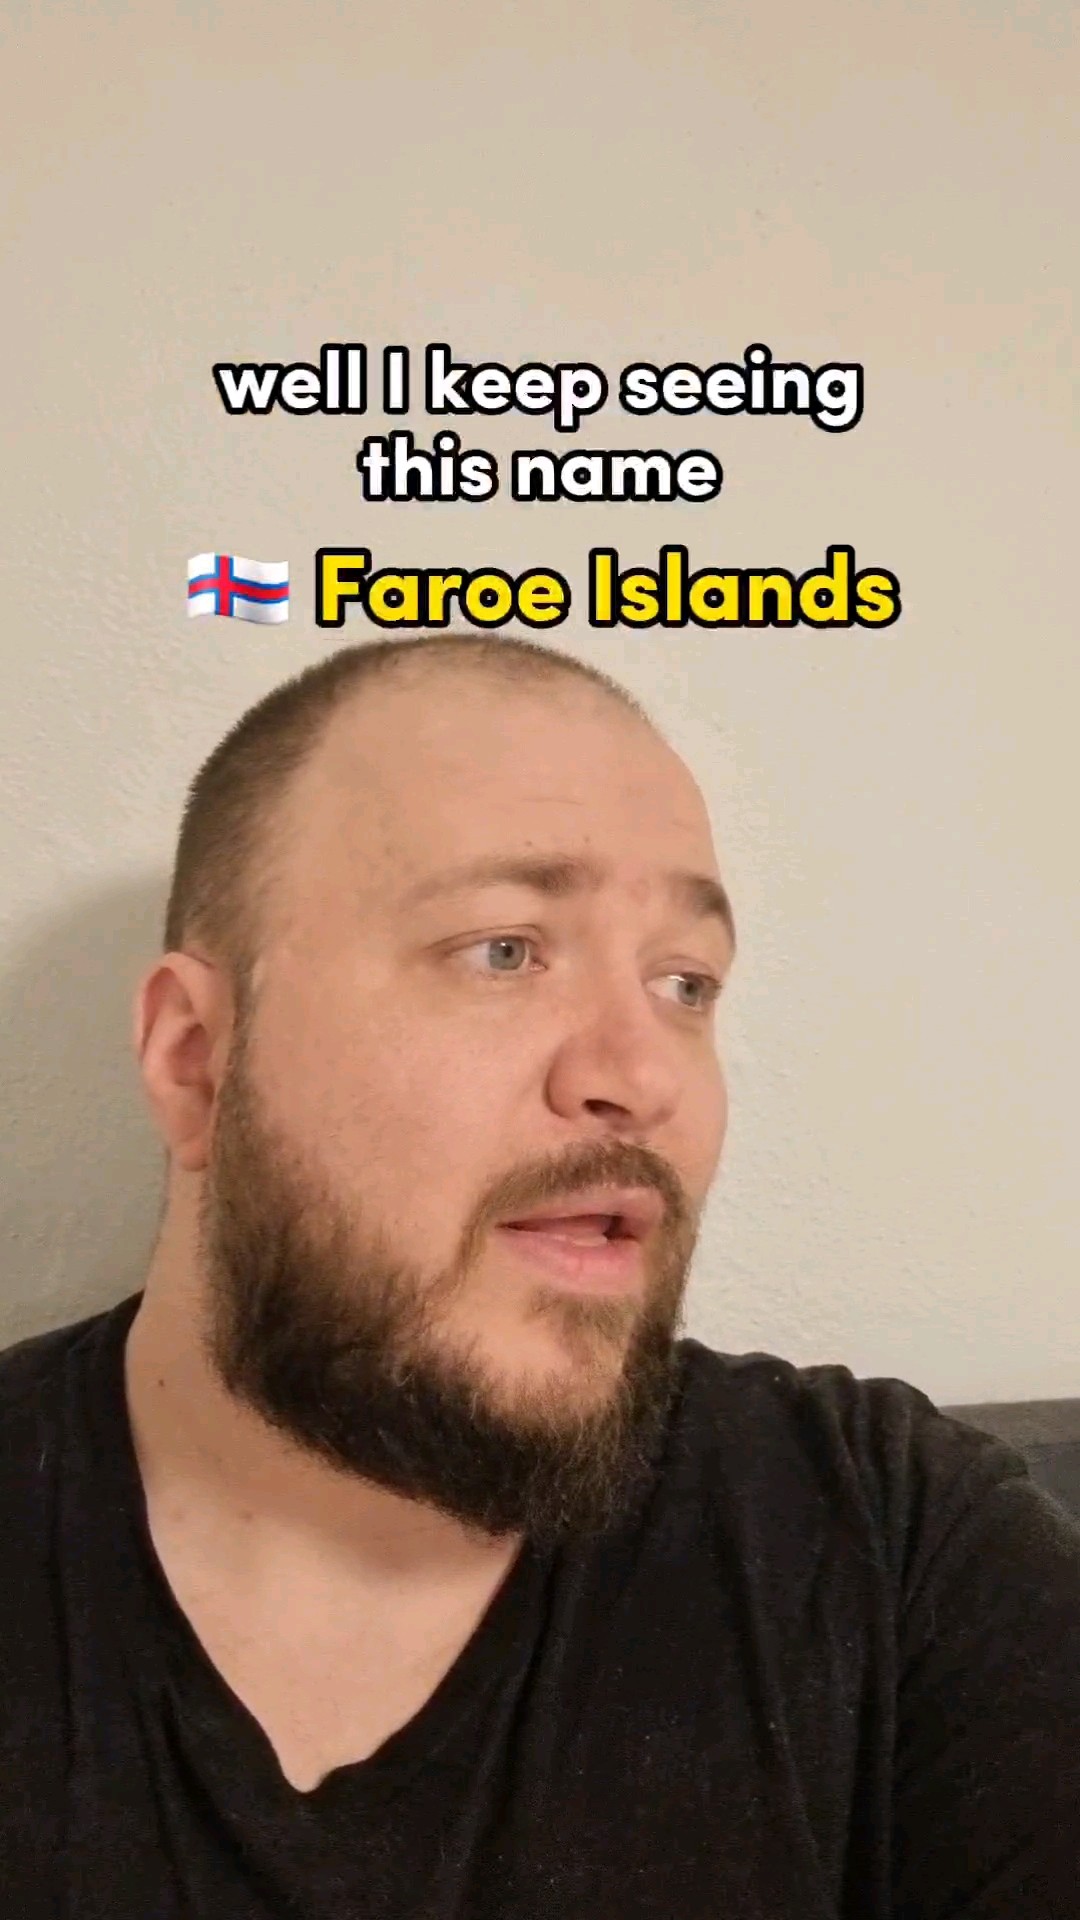 Faroe Islands? What's that. #nordics #funny #faroeislands #language